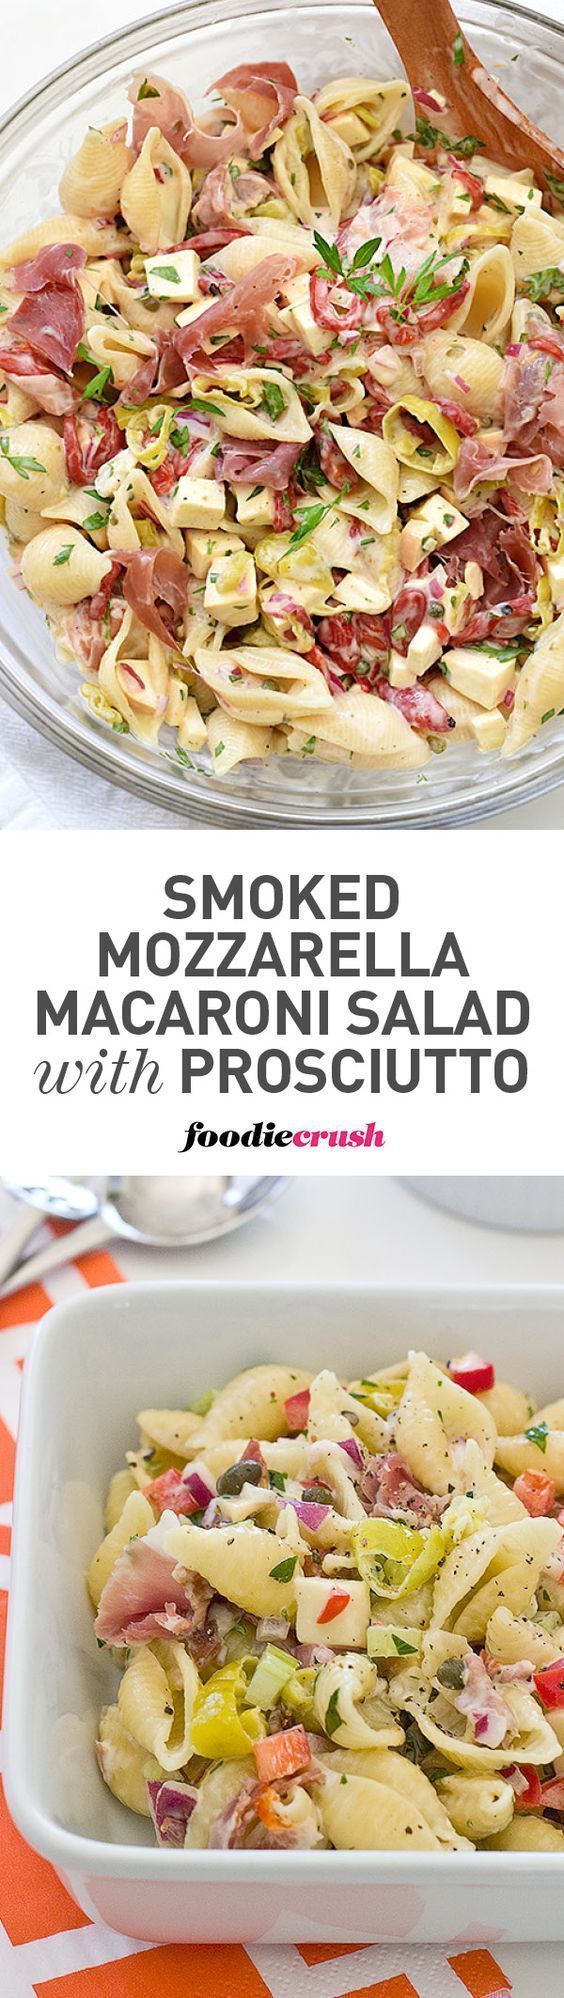 Macaroni Salad with Smoked Mozzarella and Prosciutto Pasta Salad Recipe via foodiecrush – This tangy pasta salad mixes traditional